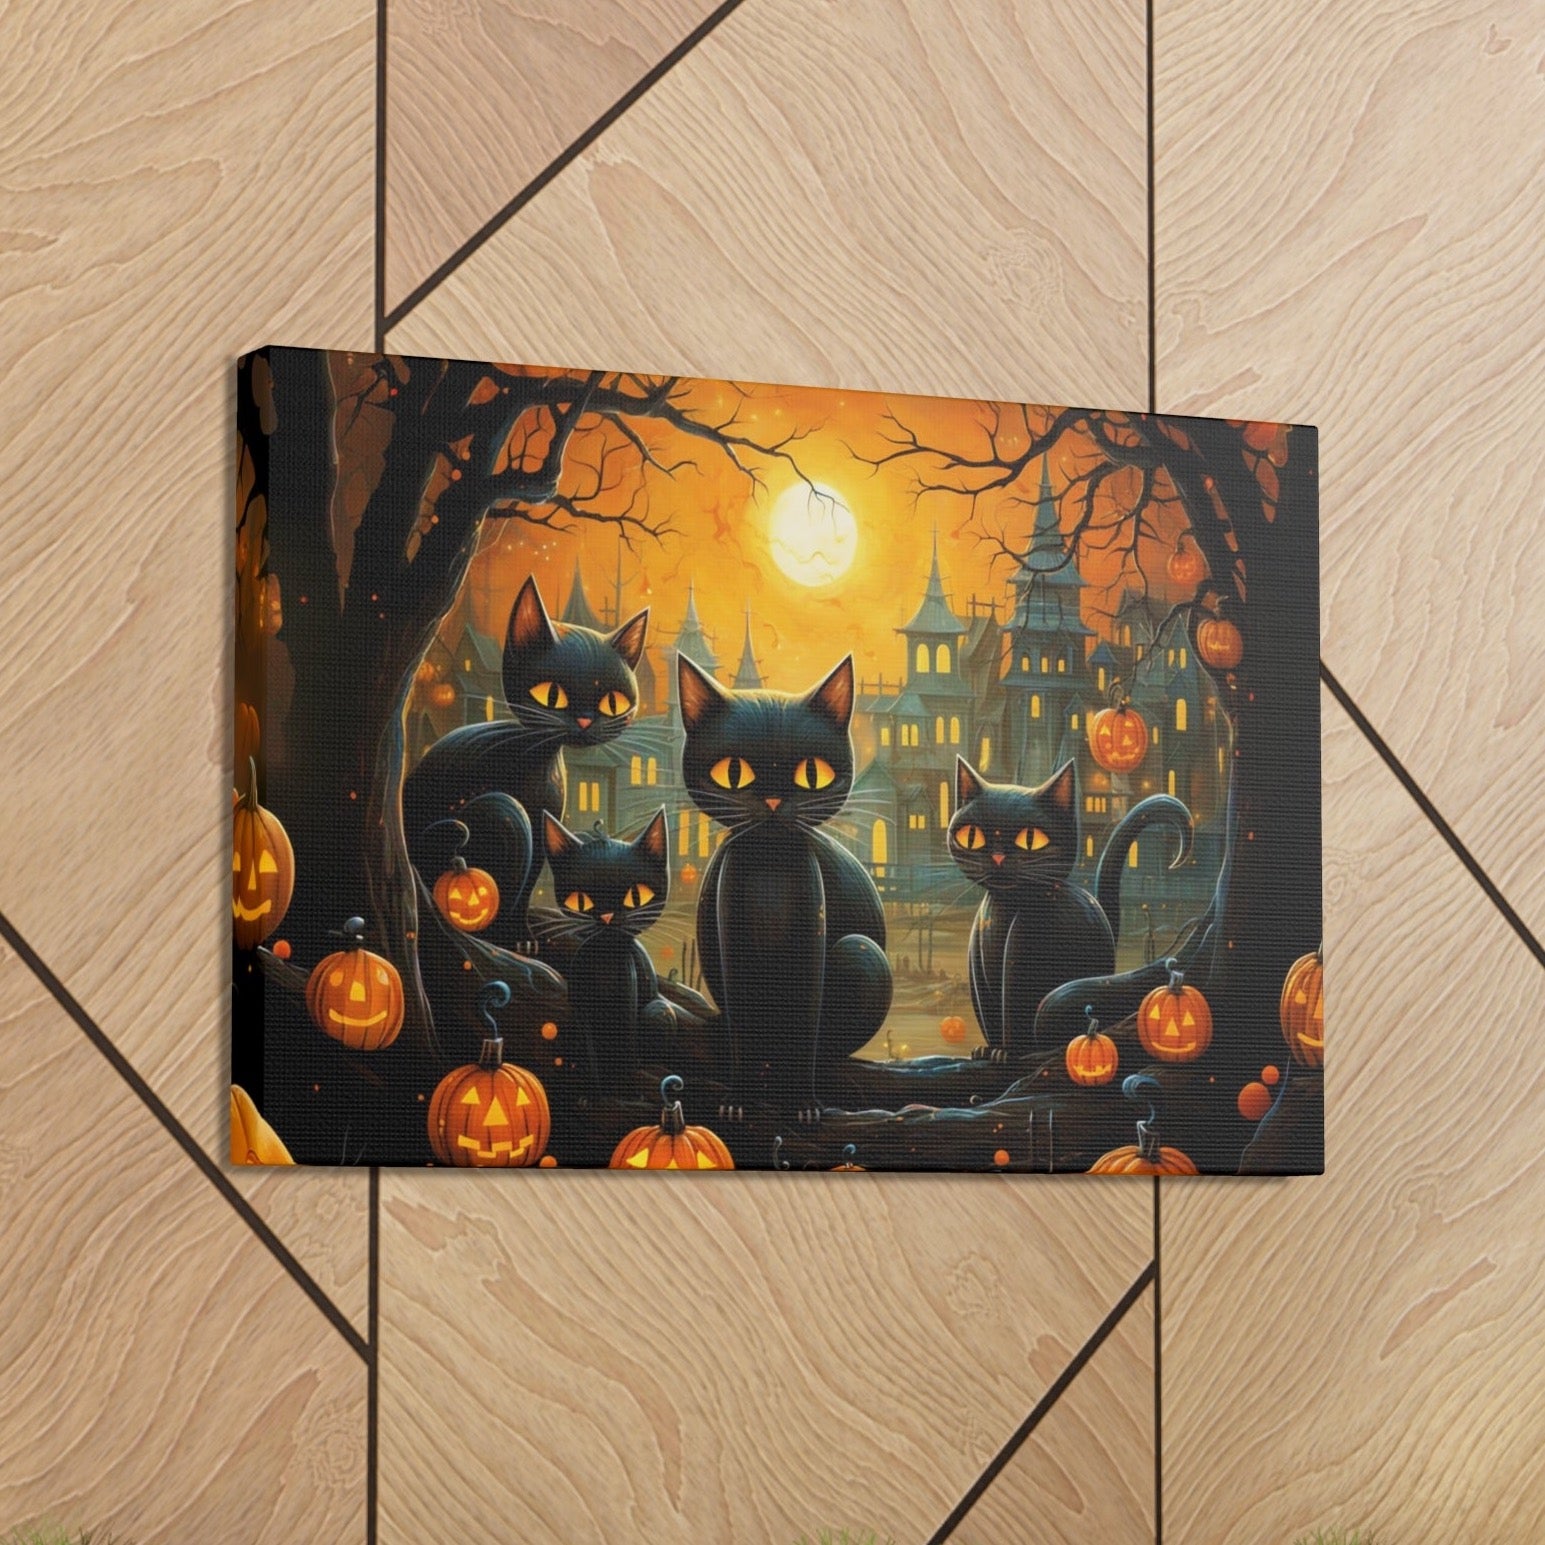 Halloween canvas prints adorable black cats